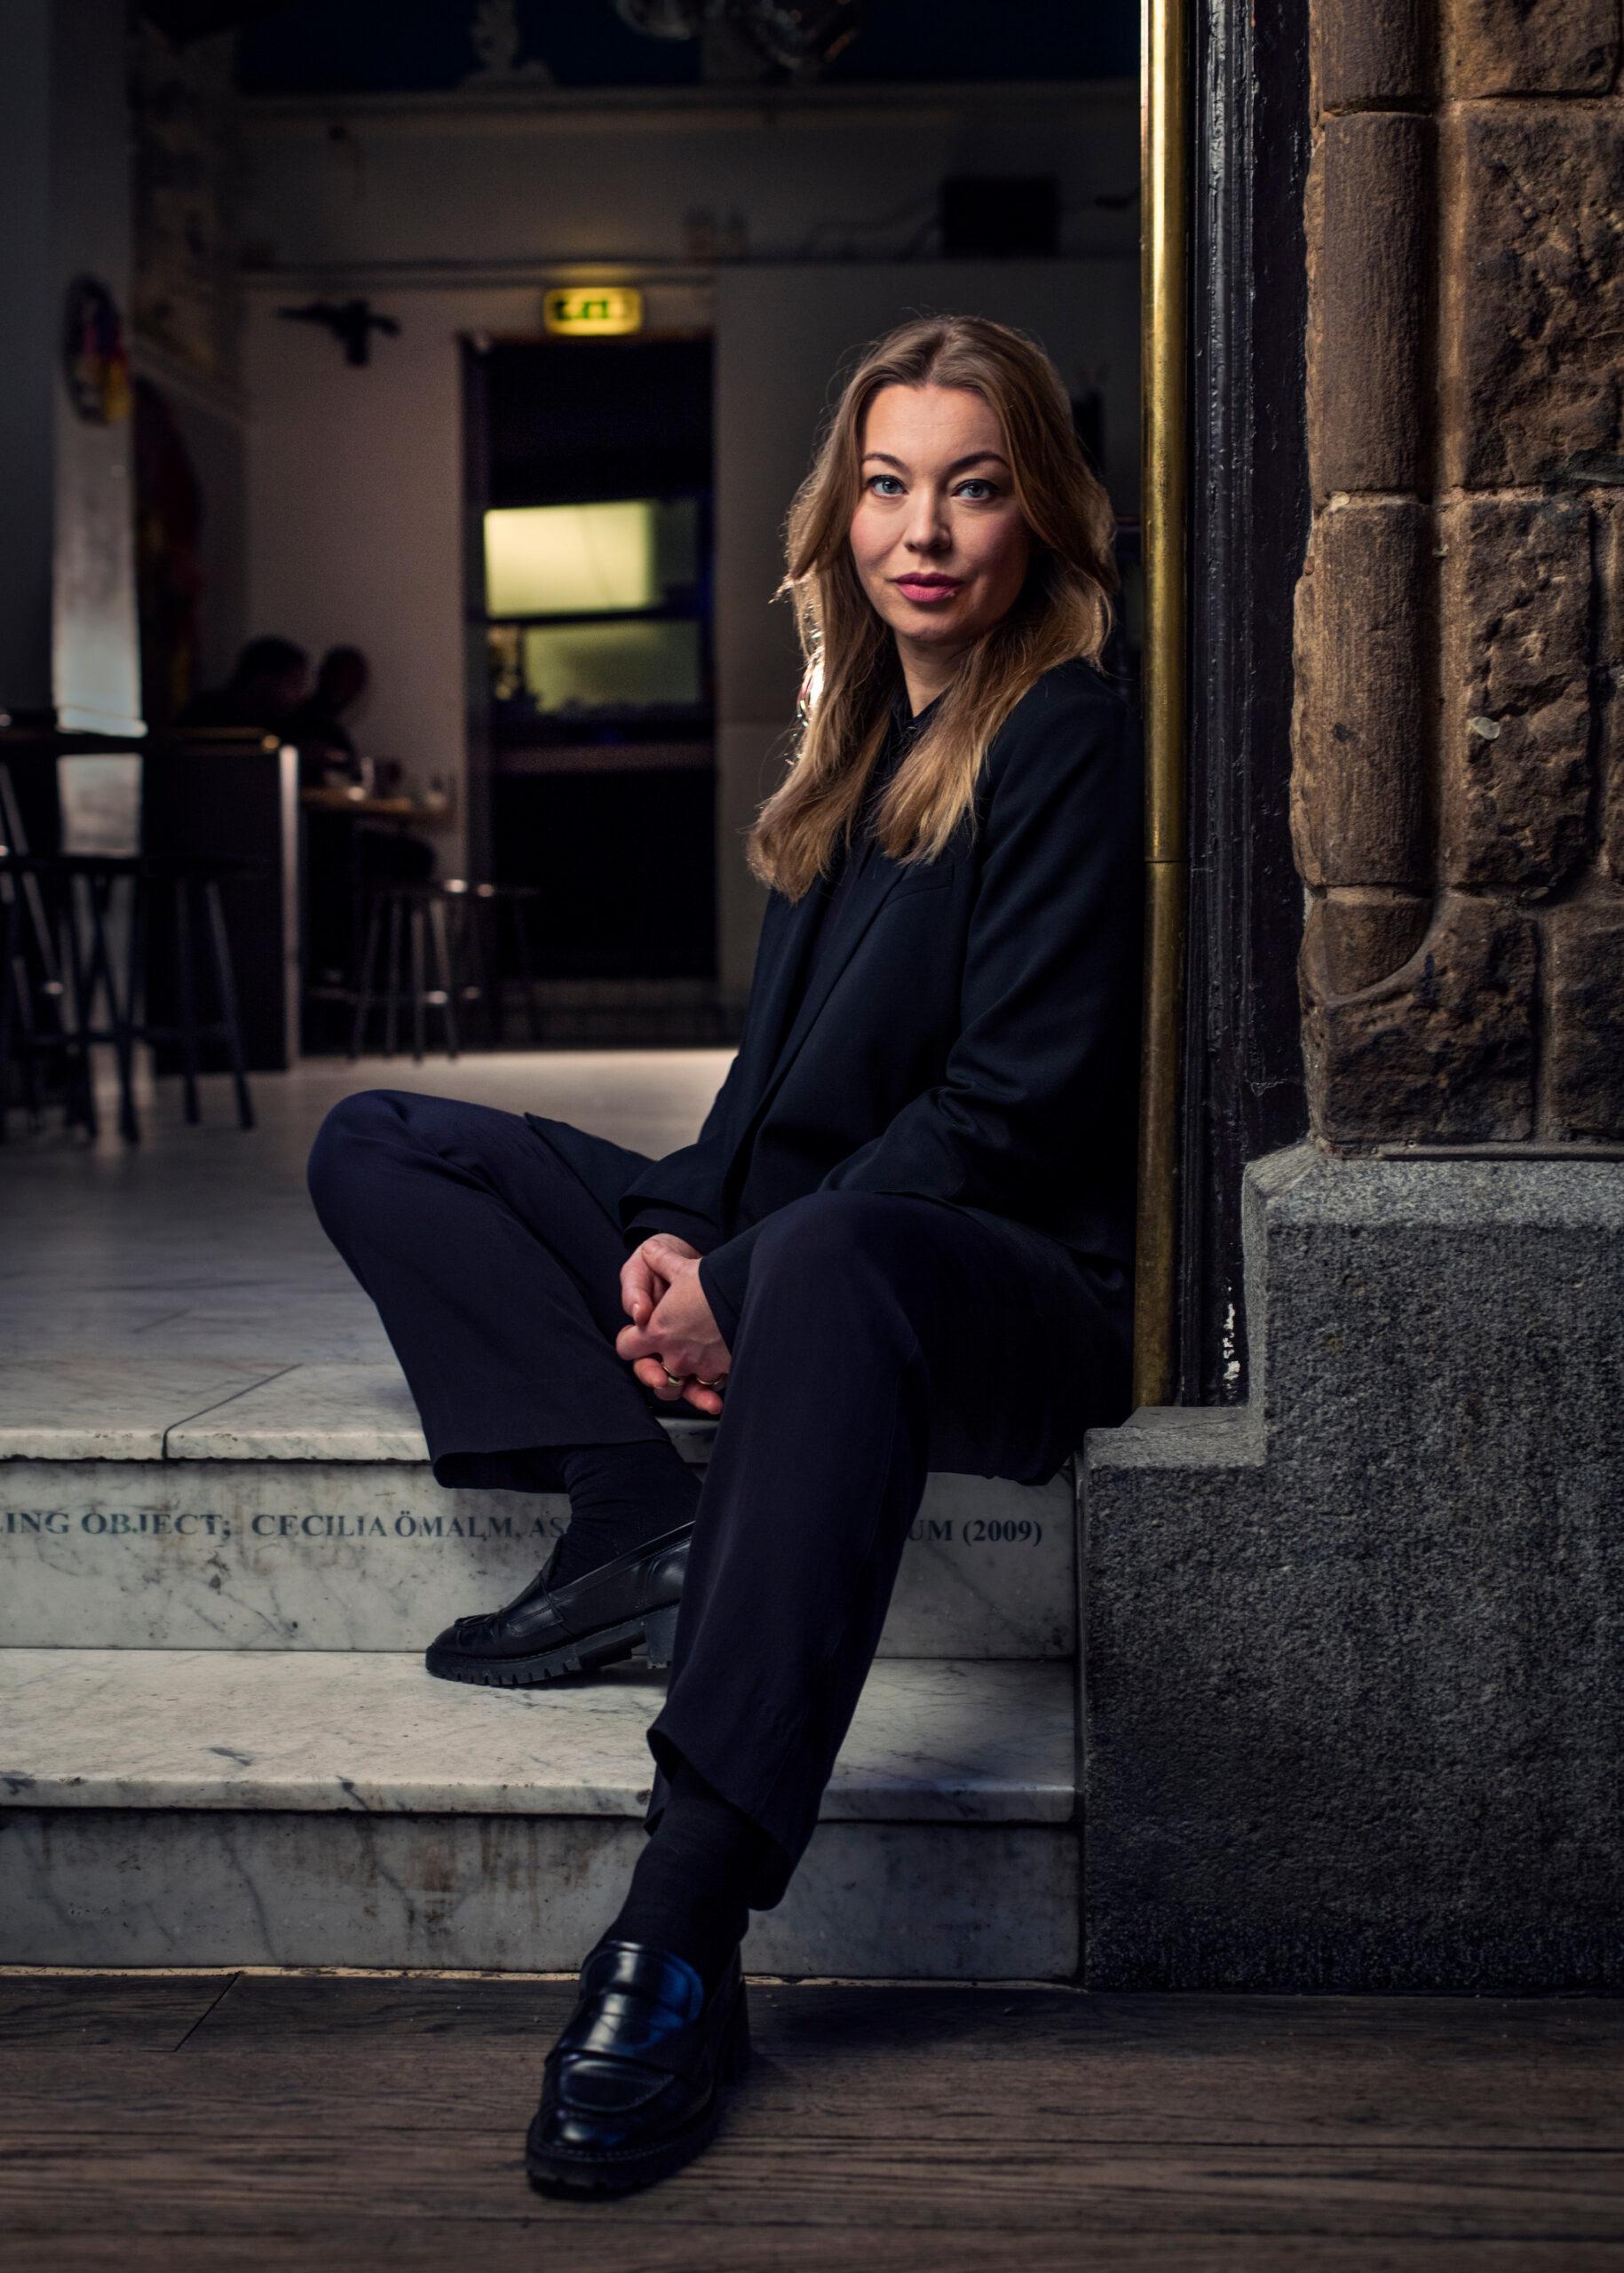 Portrait photo of Karolina Ramqvist sitting on some steps. She is wearing a dark suit.